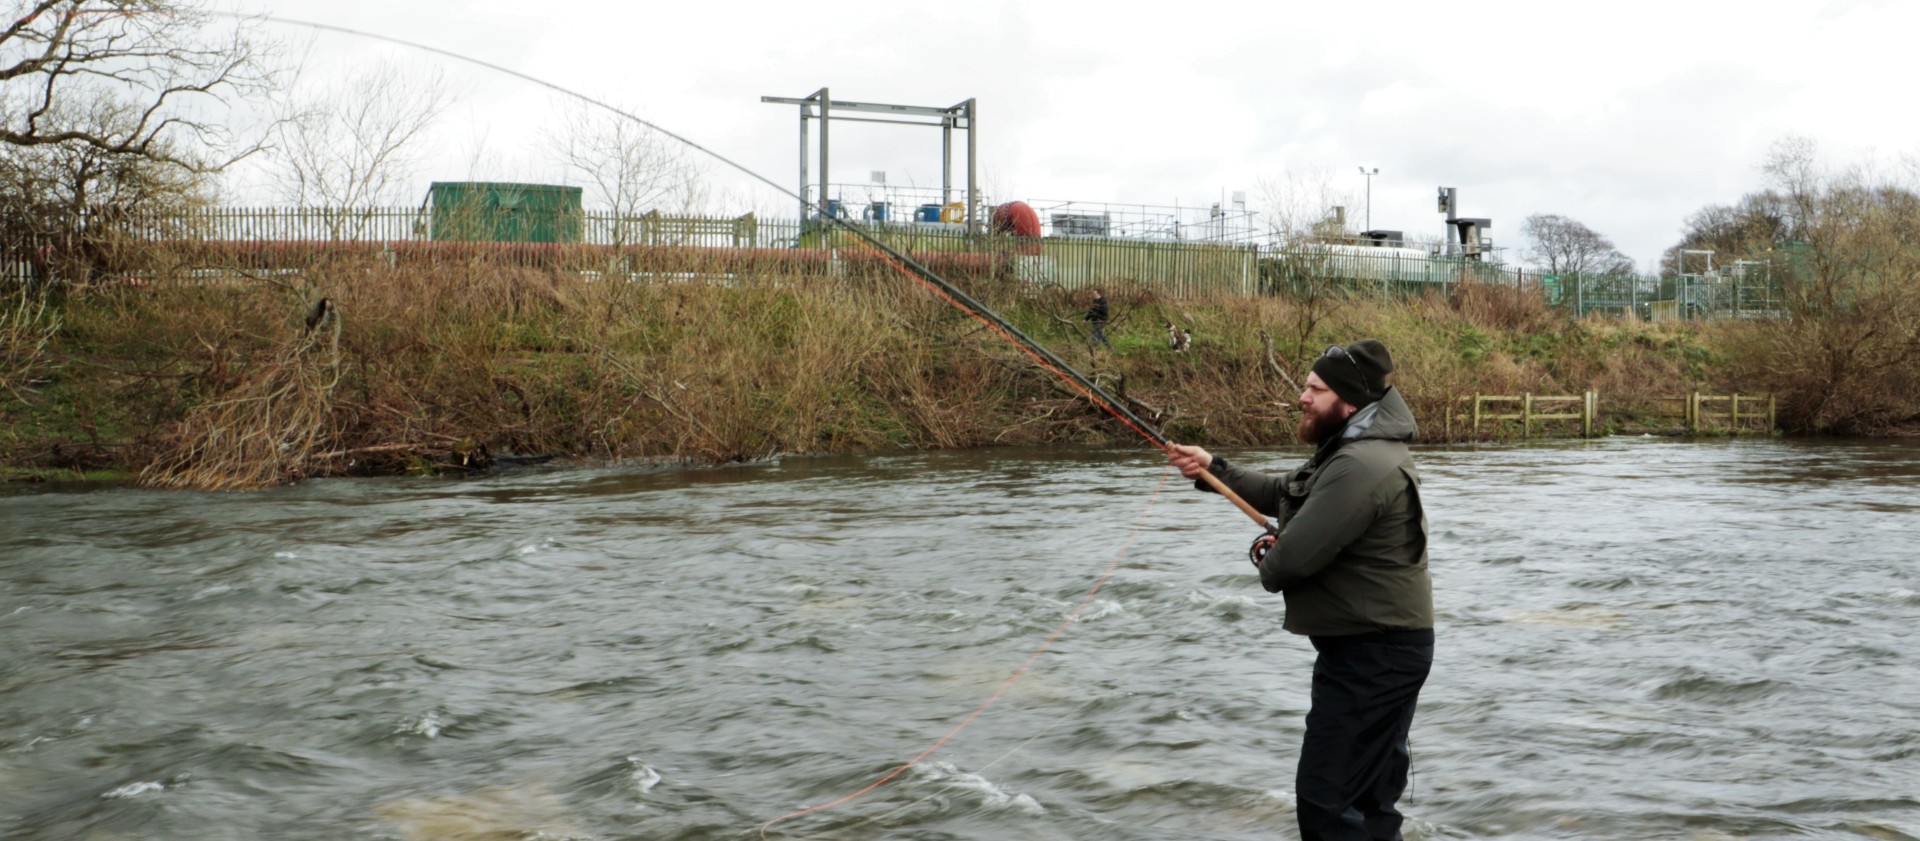 Angler on River Kent near outfall